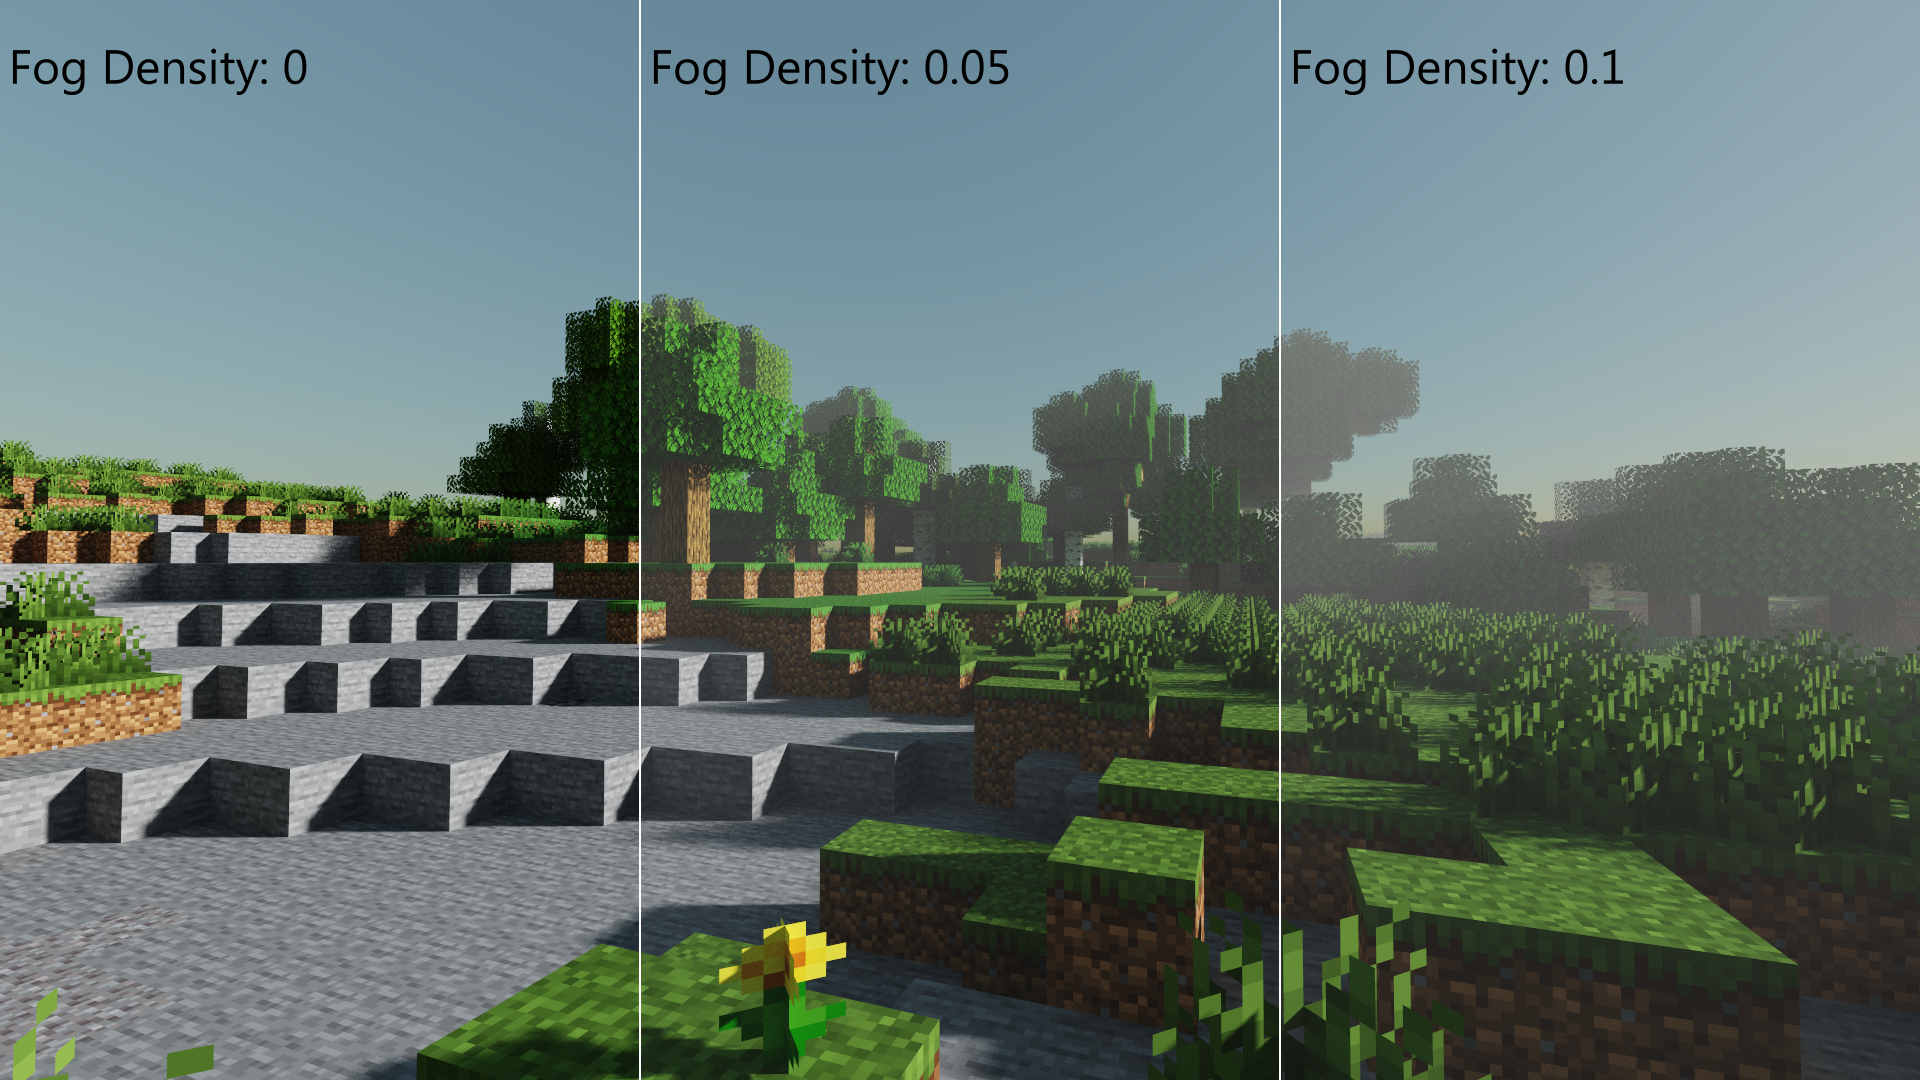 Comparison of different fog density levels